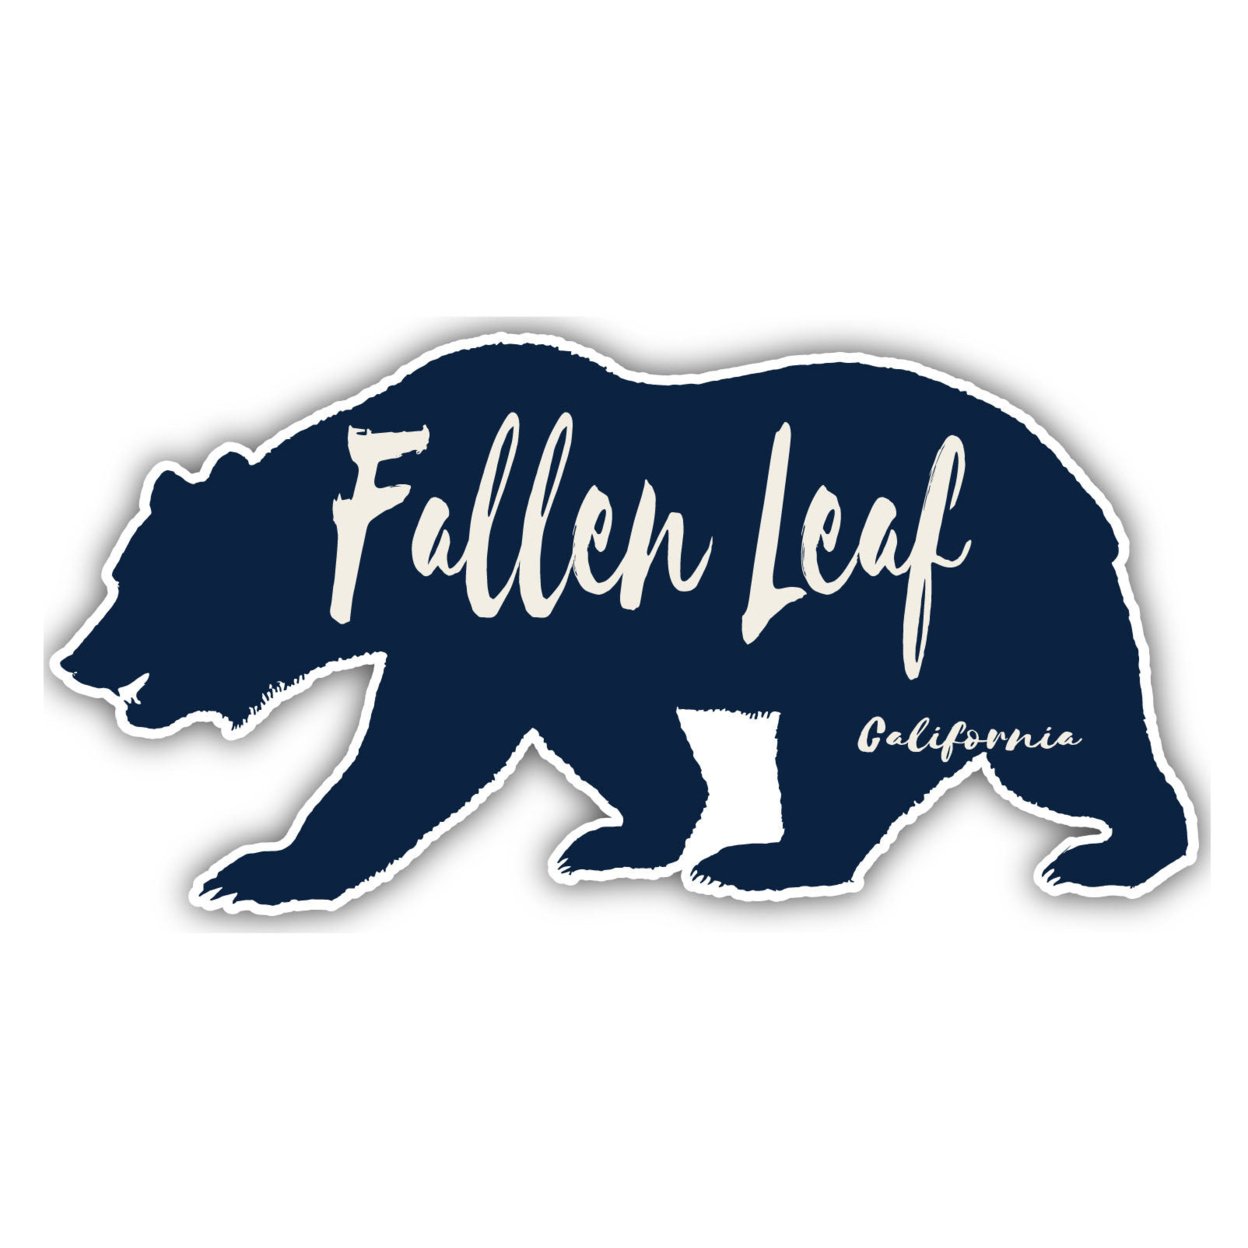 Fallen Leaf California Souvenir Decorative Stickers (Choose Theme And Size) - 4-Pack, 4-Inch, Bear